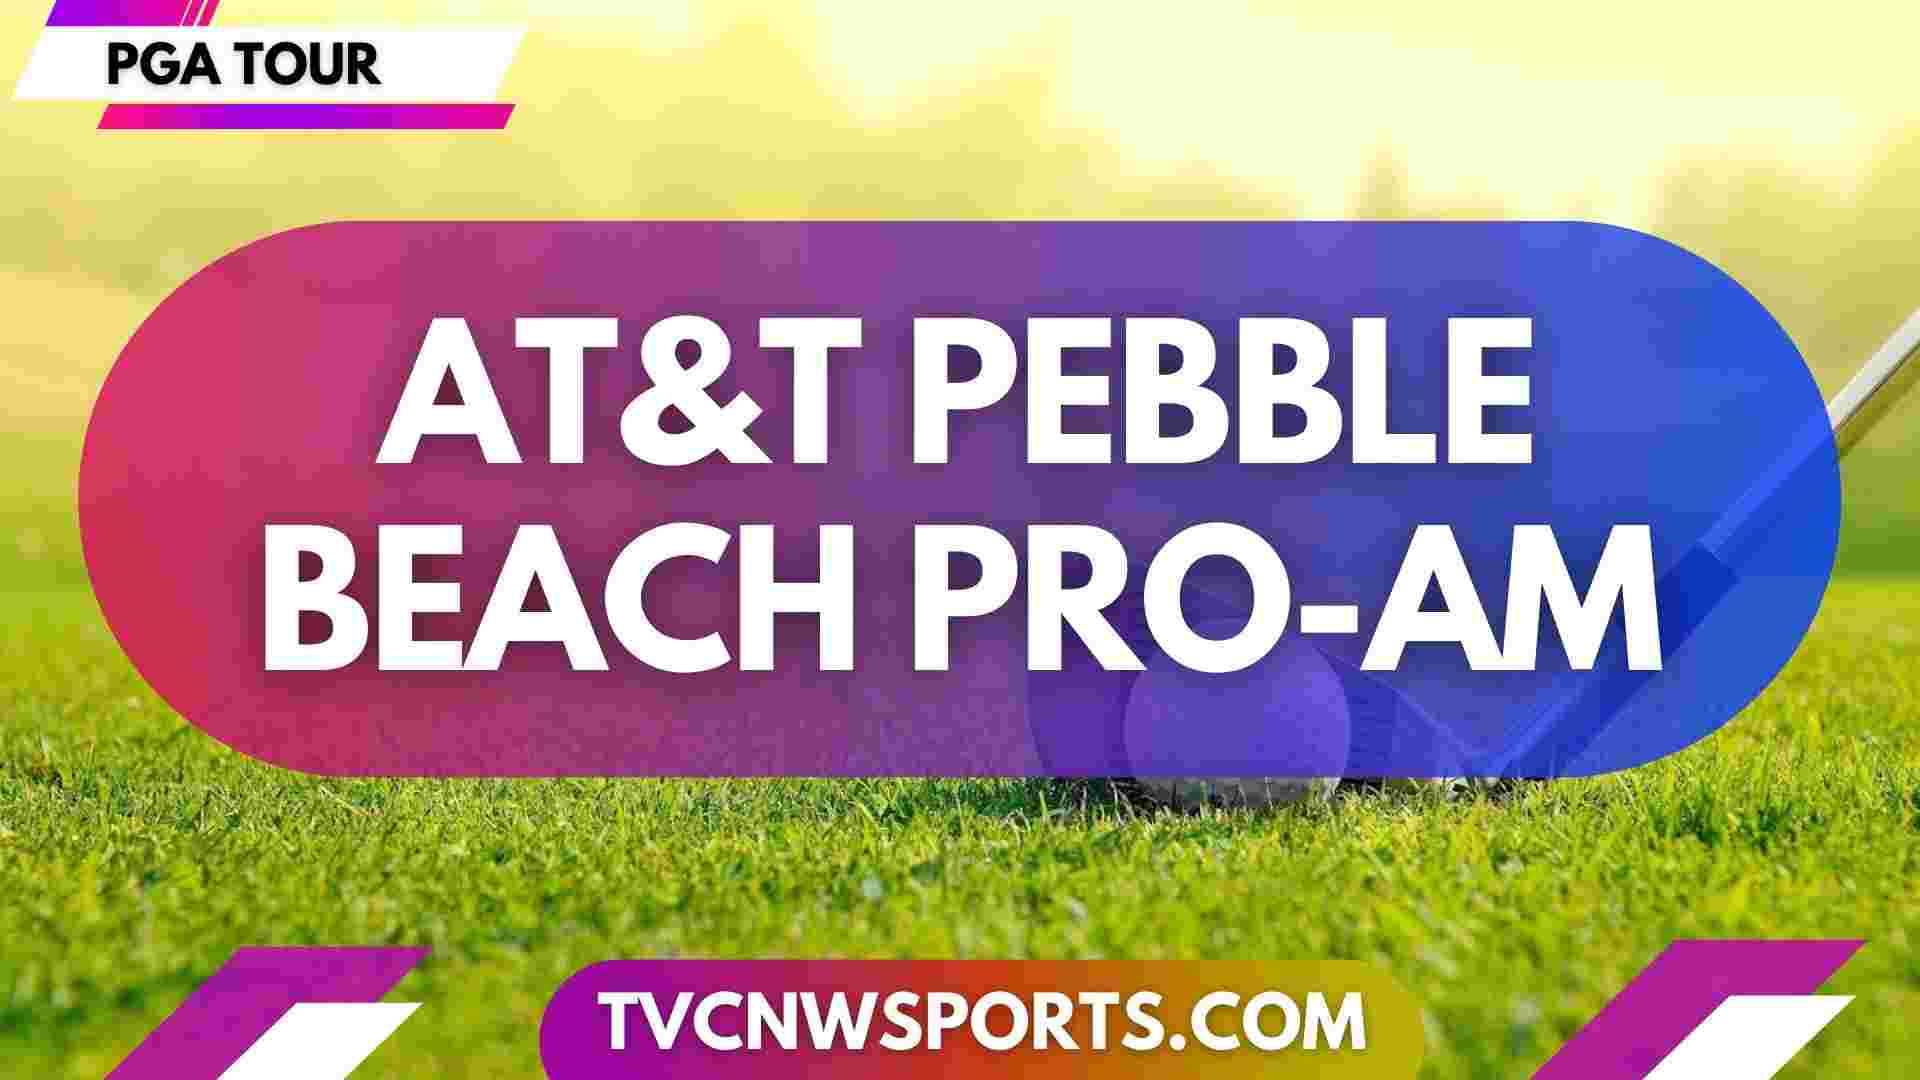 ATT Pebble Beach Pro Am Golf PGA Tour